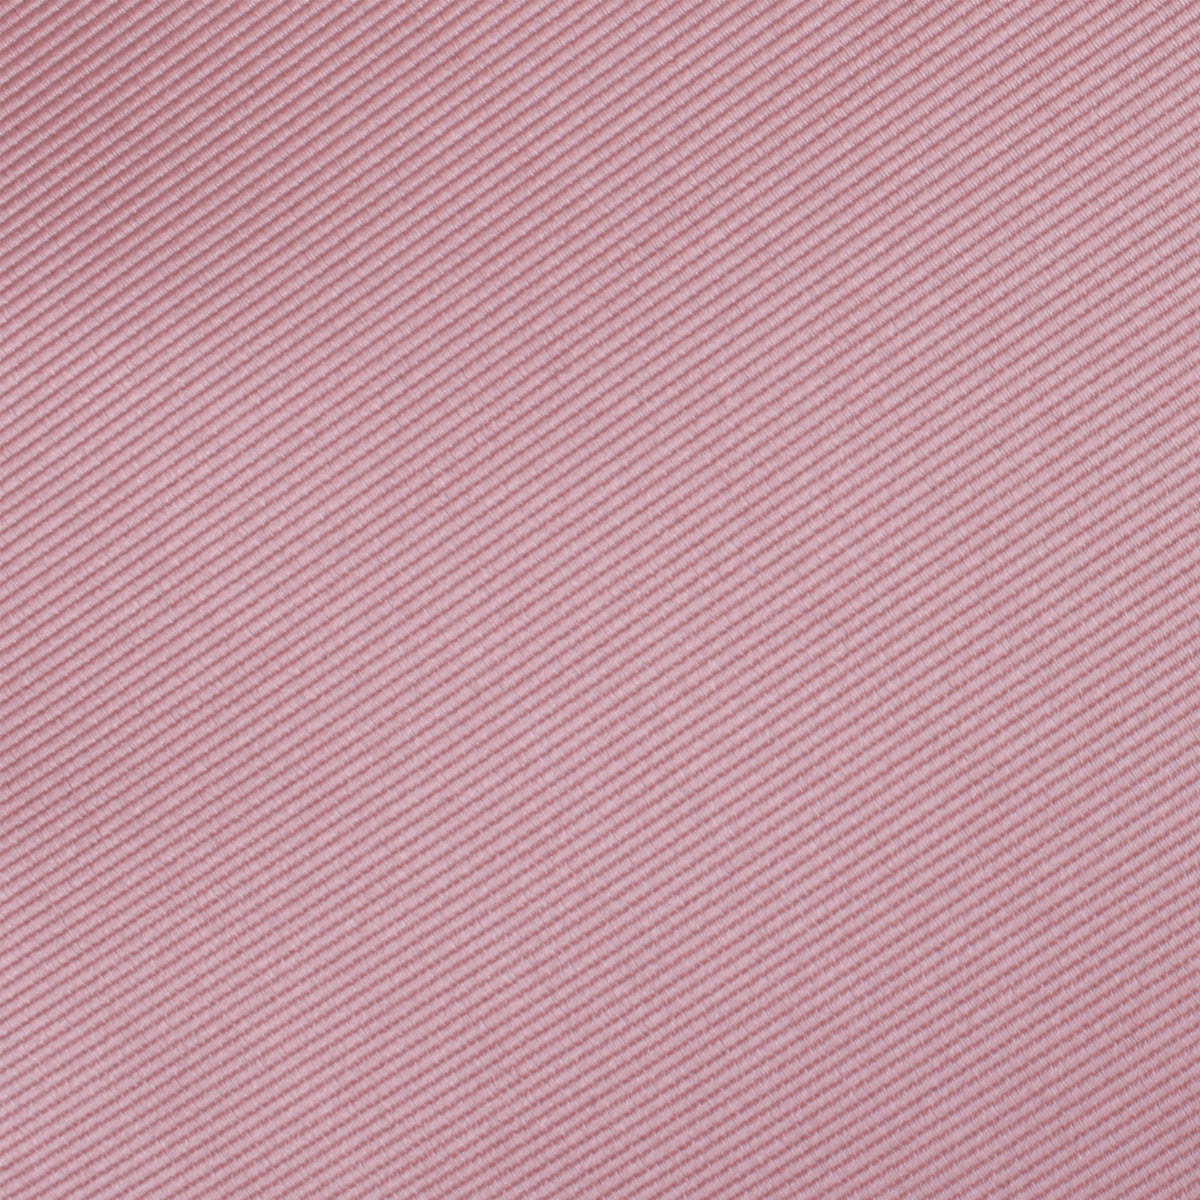 Dusty Rose Twill Pocket Square Fabric